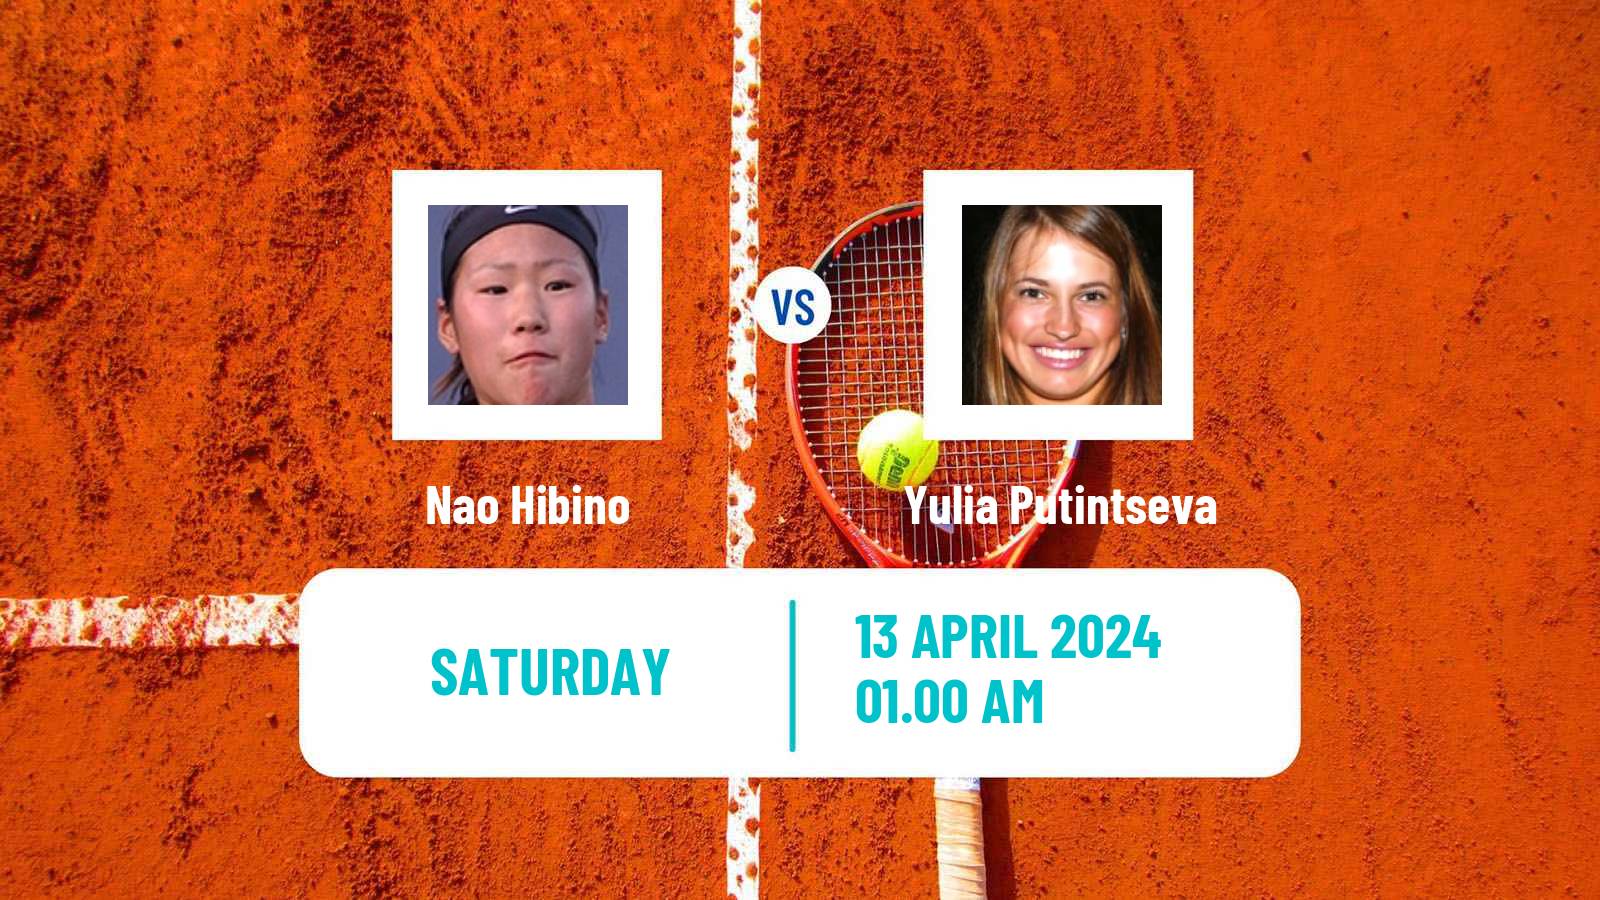 Tennis WTA Billie Jean King Cup World Group Nao Hibino - Yulia Putintseva